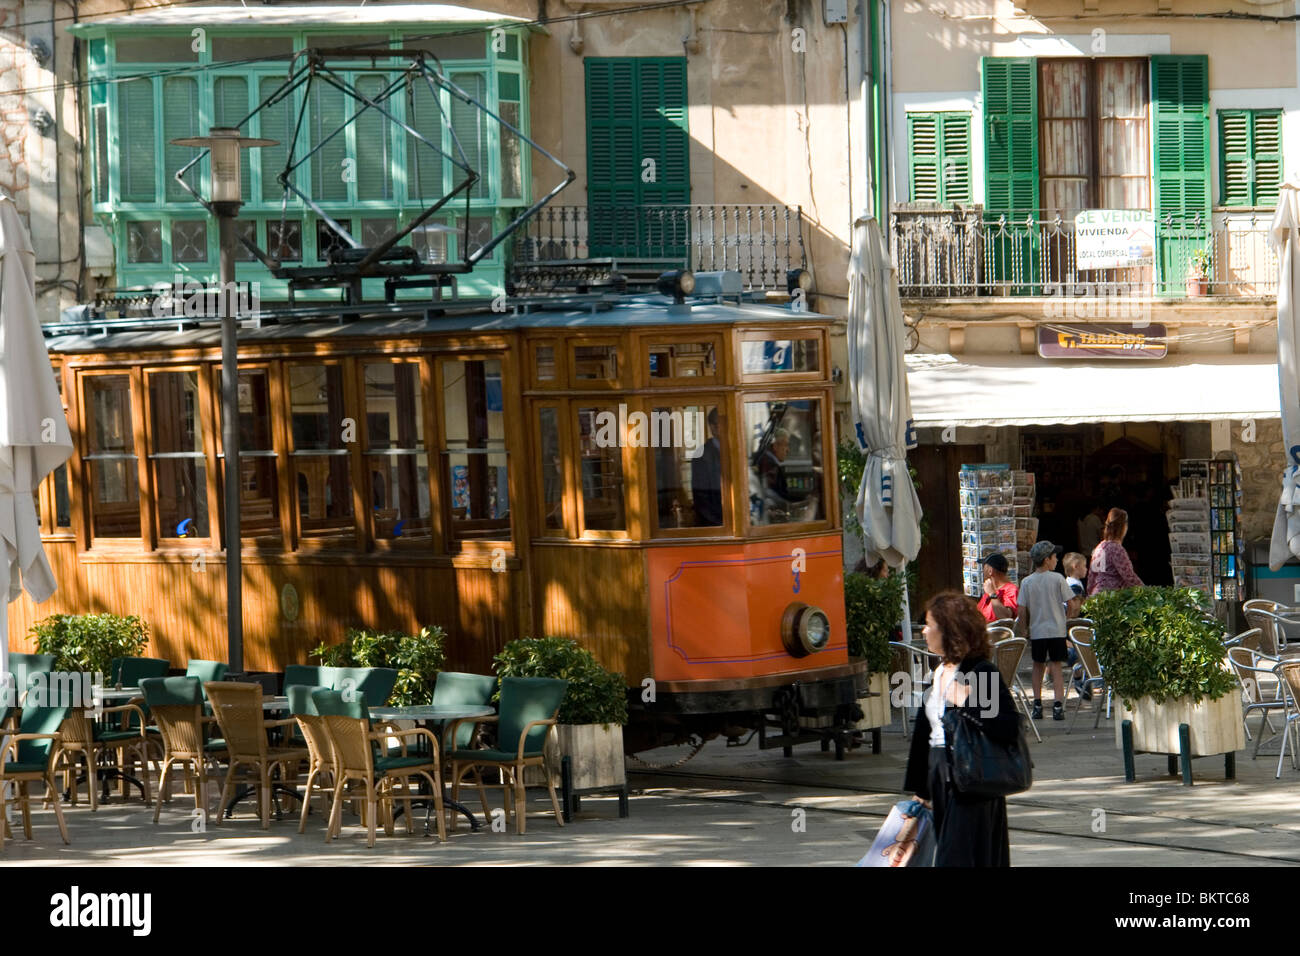 The old colourful tramway of Soller (Majorca - Spain). Le vieil et pittoresque tramway de Soller (Majorque - Espagne). Stock Photo